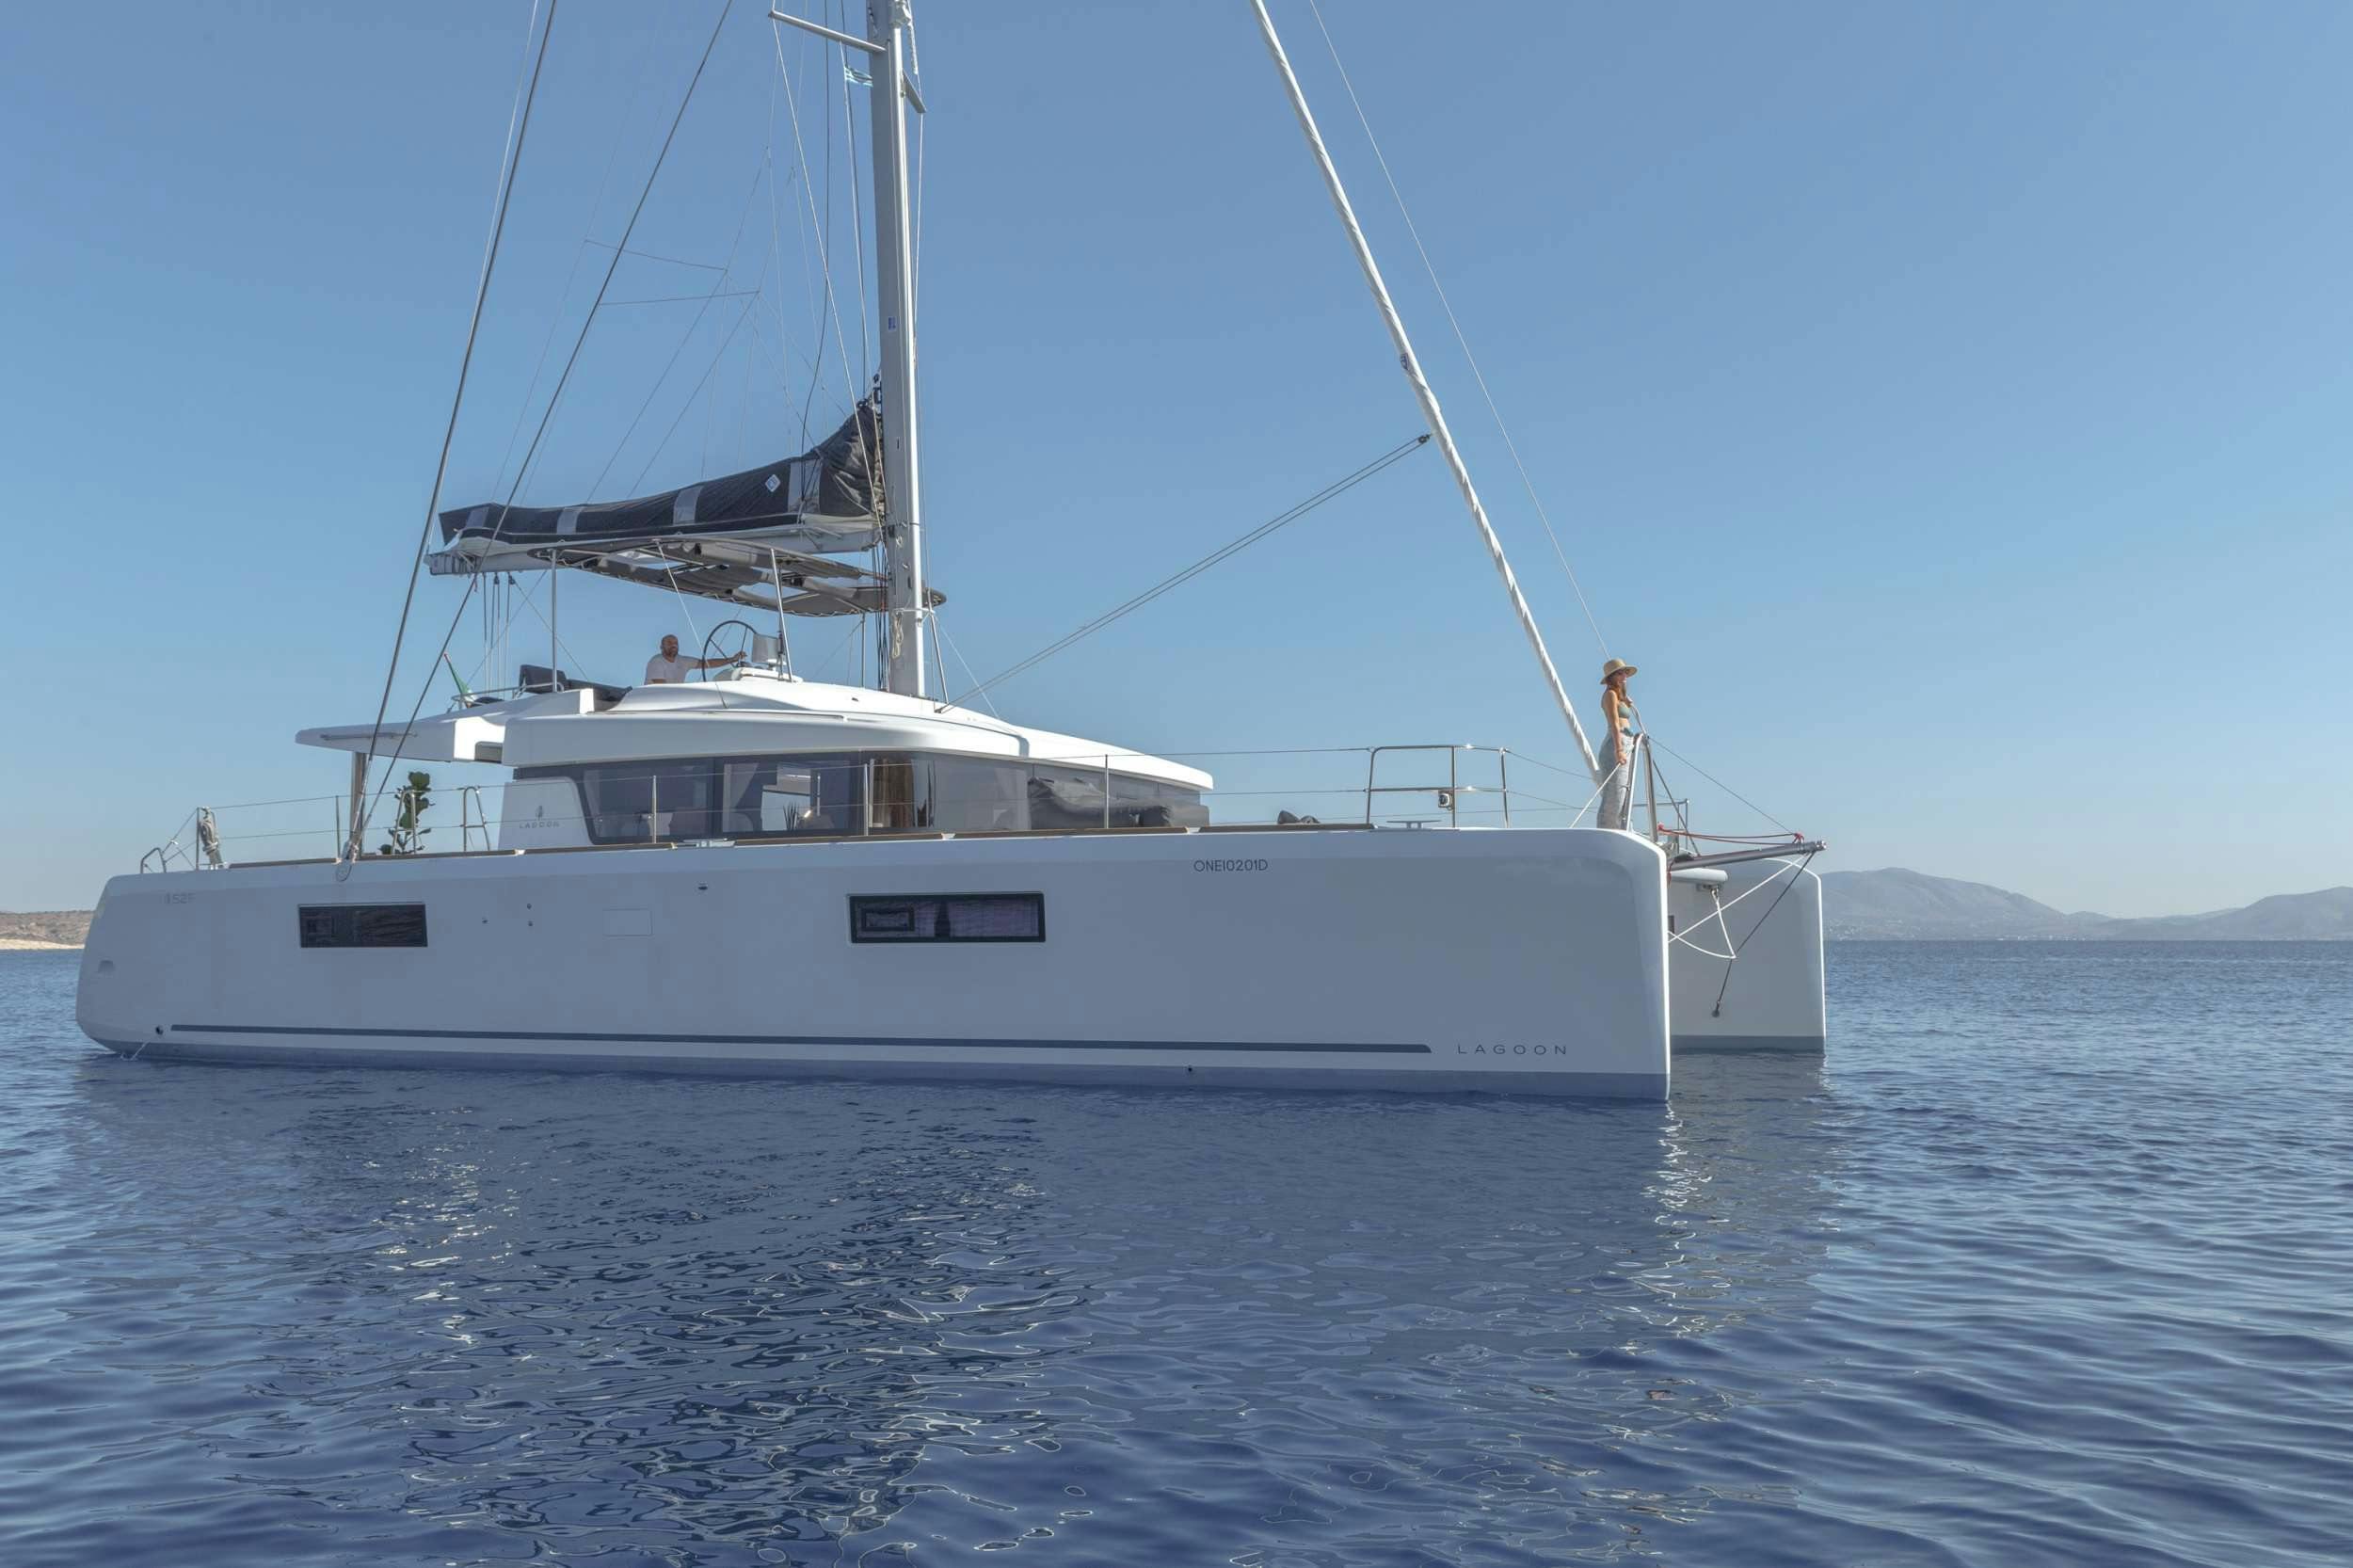 ONEIDA - Alimos Yacht Charter & Boat hire in Greece 1